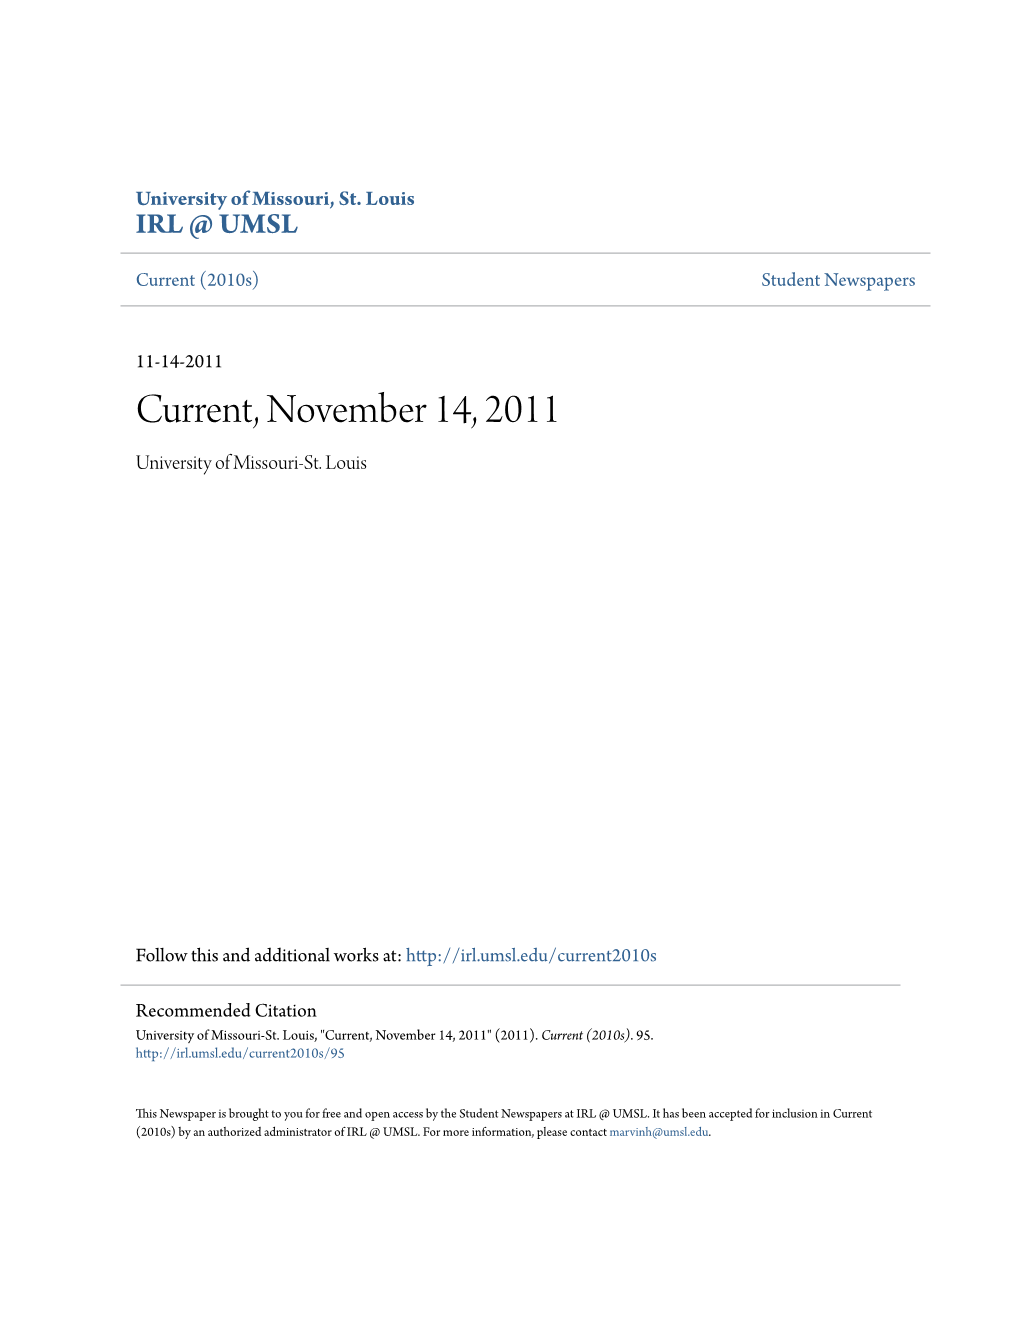 Current, November 14, 2011 University of Missouri-St